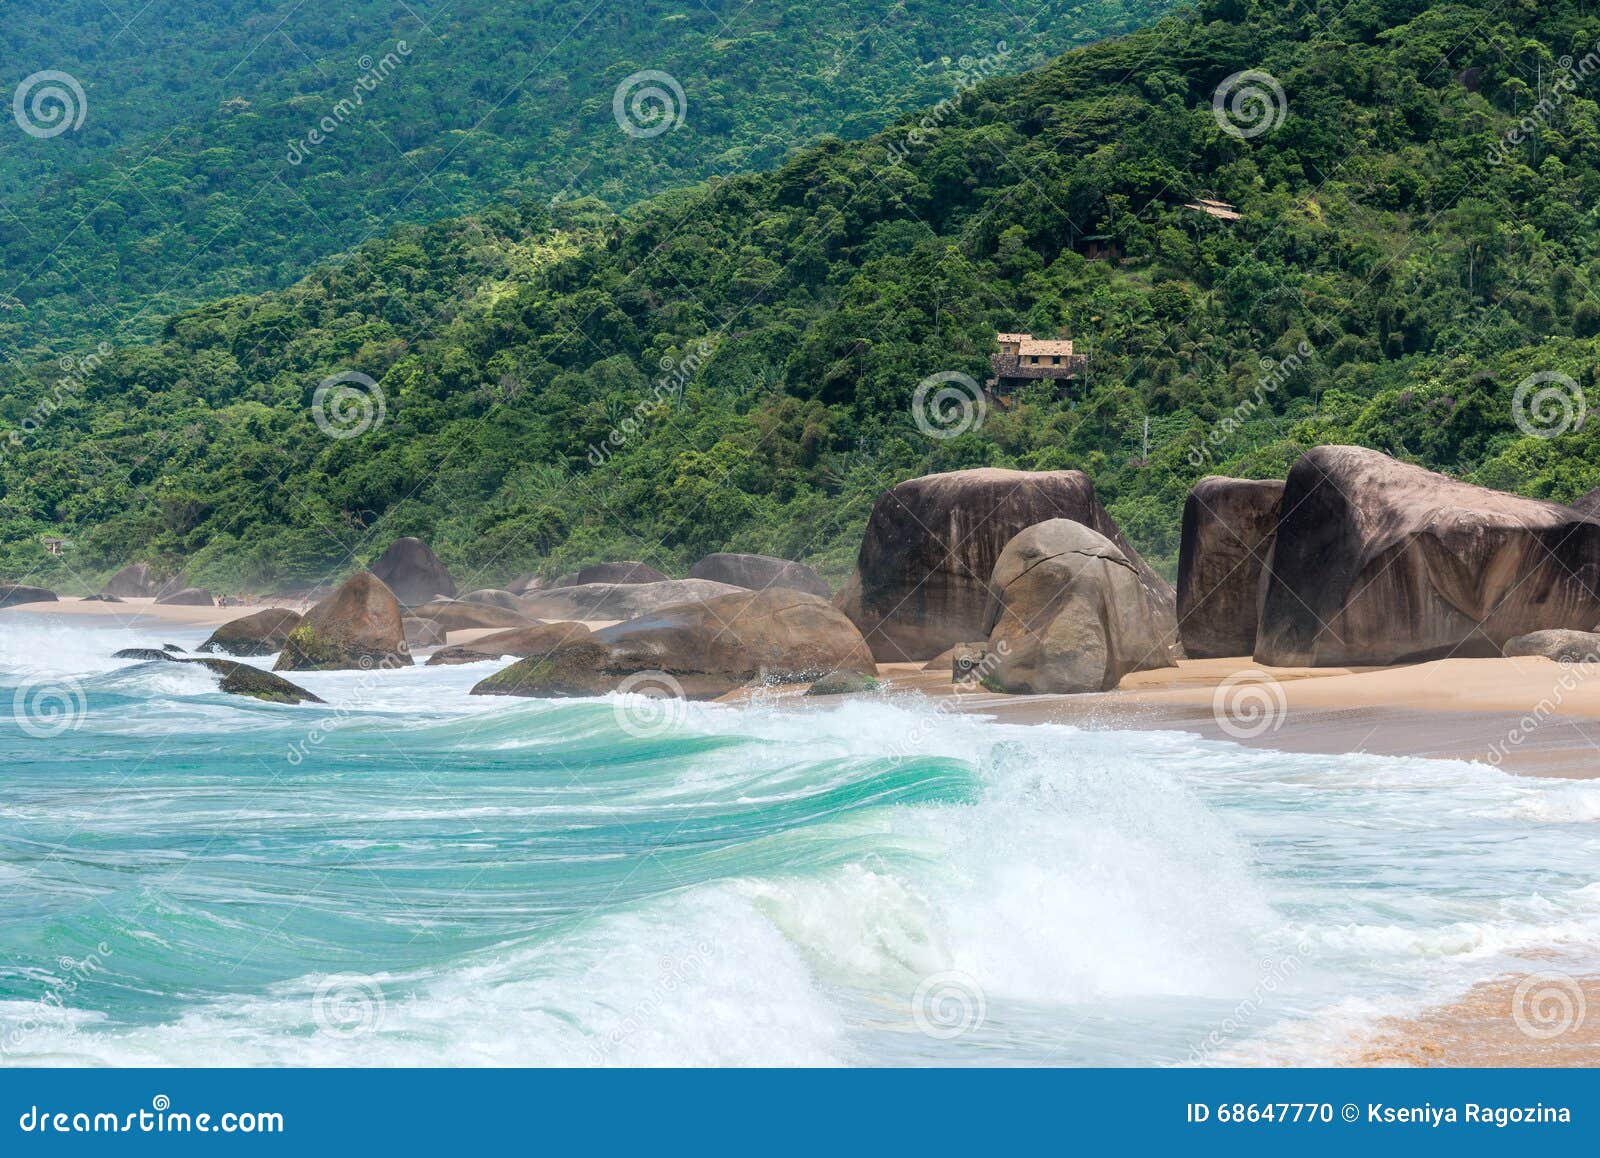 beach in trinidade - paraty, brazil